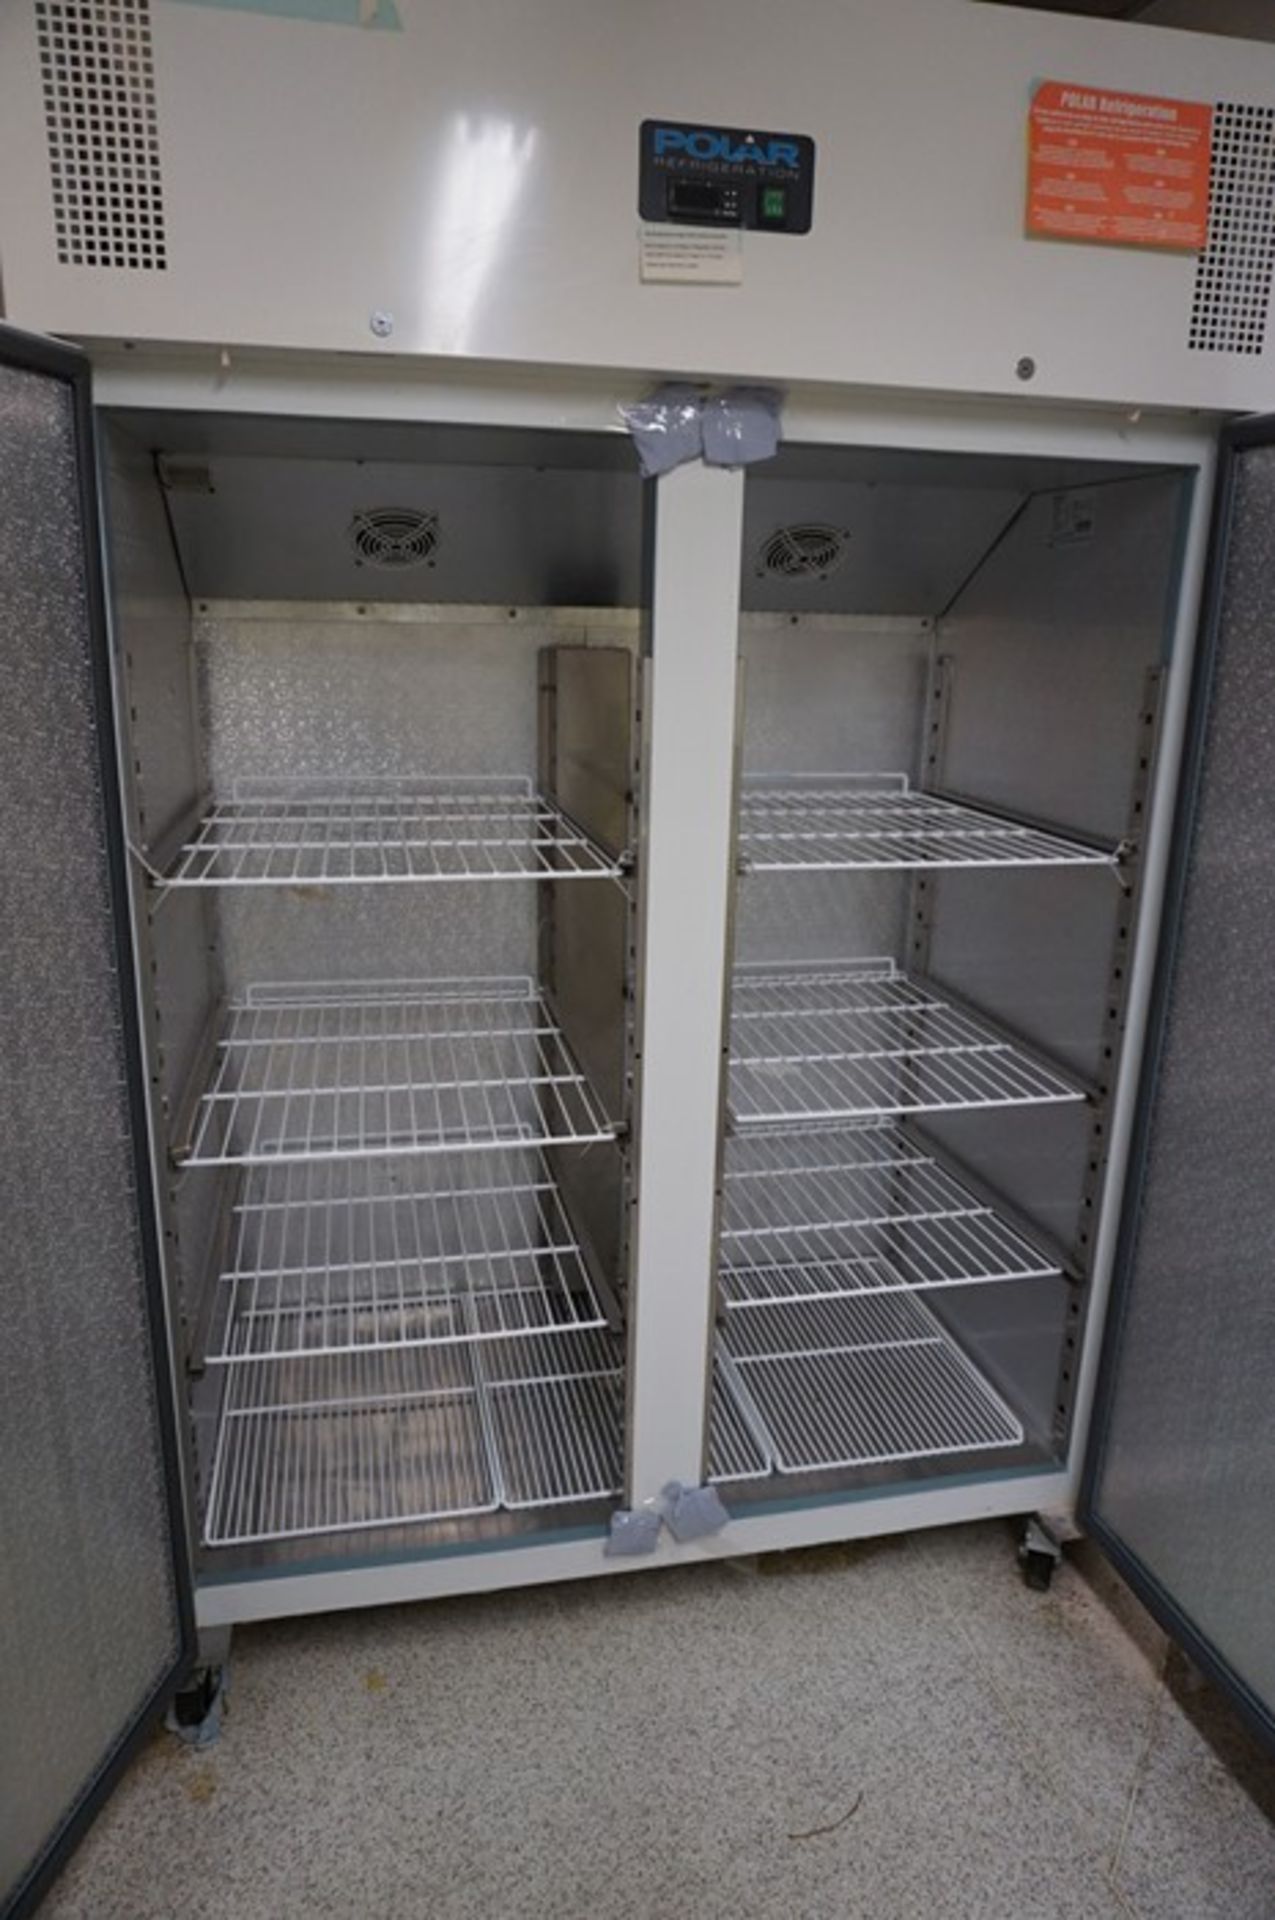 Polar, Model: CC663, mobile double door refrigerator, Serial No. 165012, 2m (h) x 1.32, (w) x 0. - Image 7 of 9